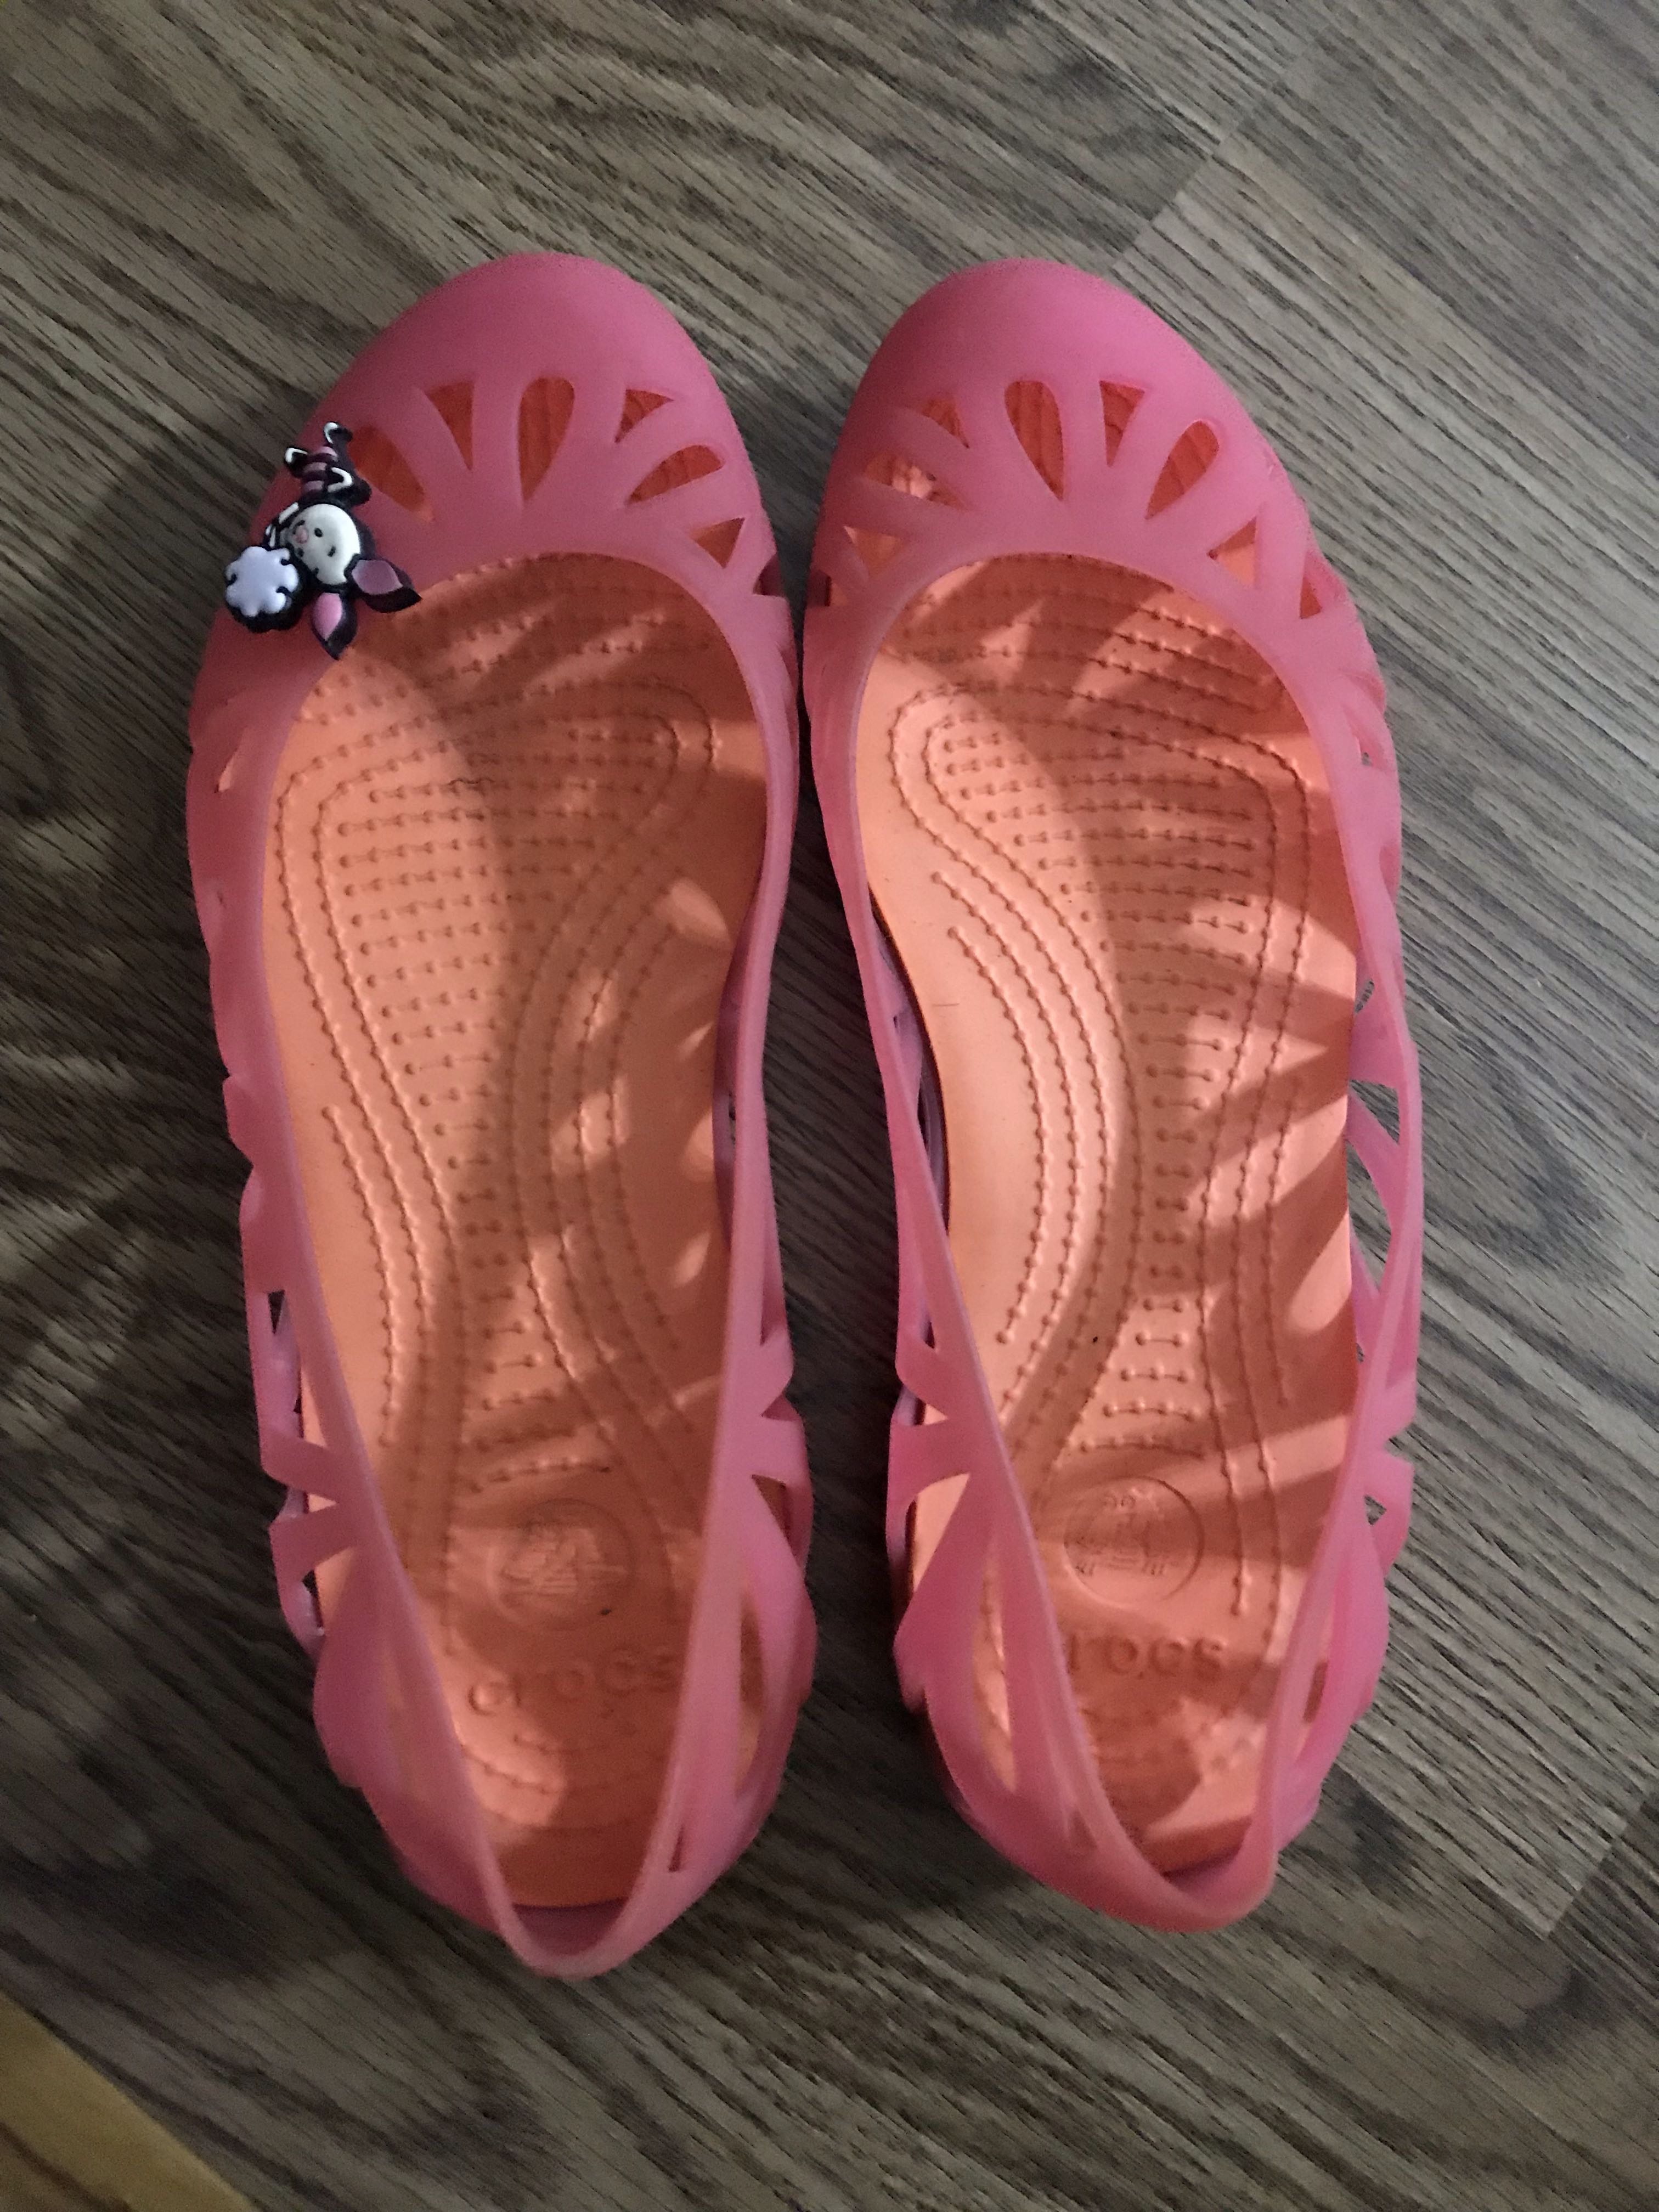 crocs rubber slippers